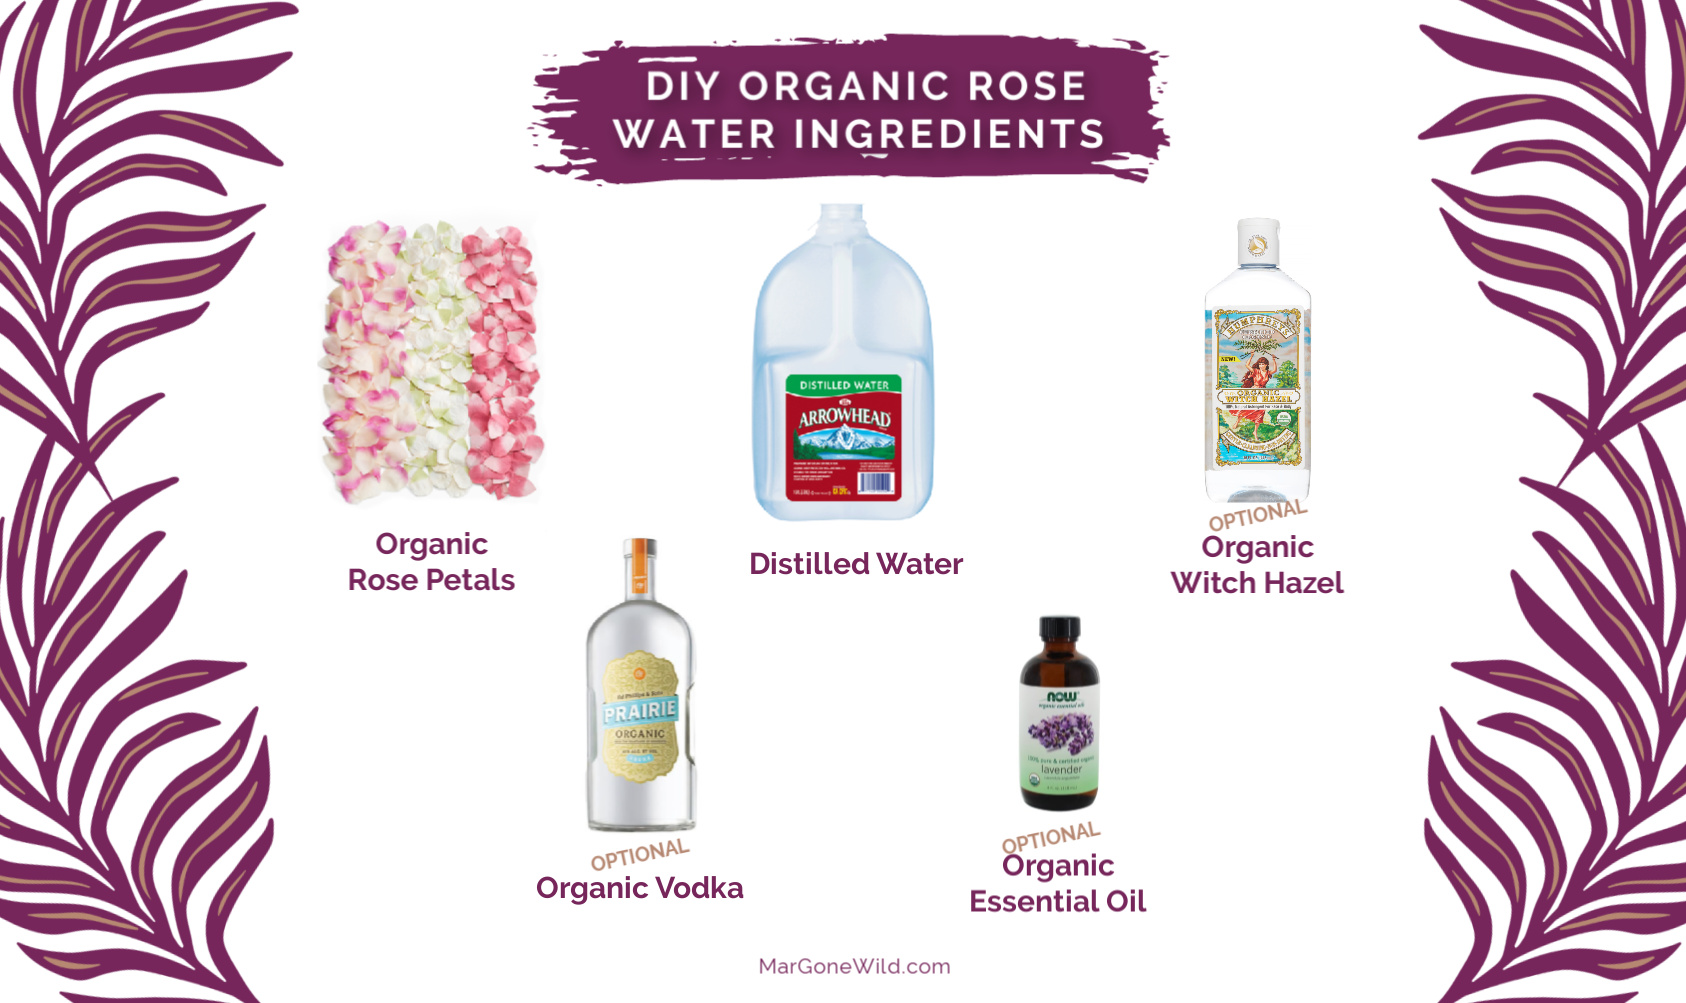 DIY rose water mist and toner ingredients - MarGoneWild.com copy